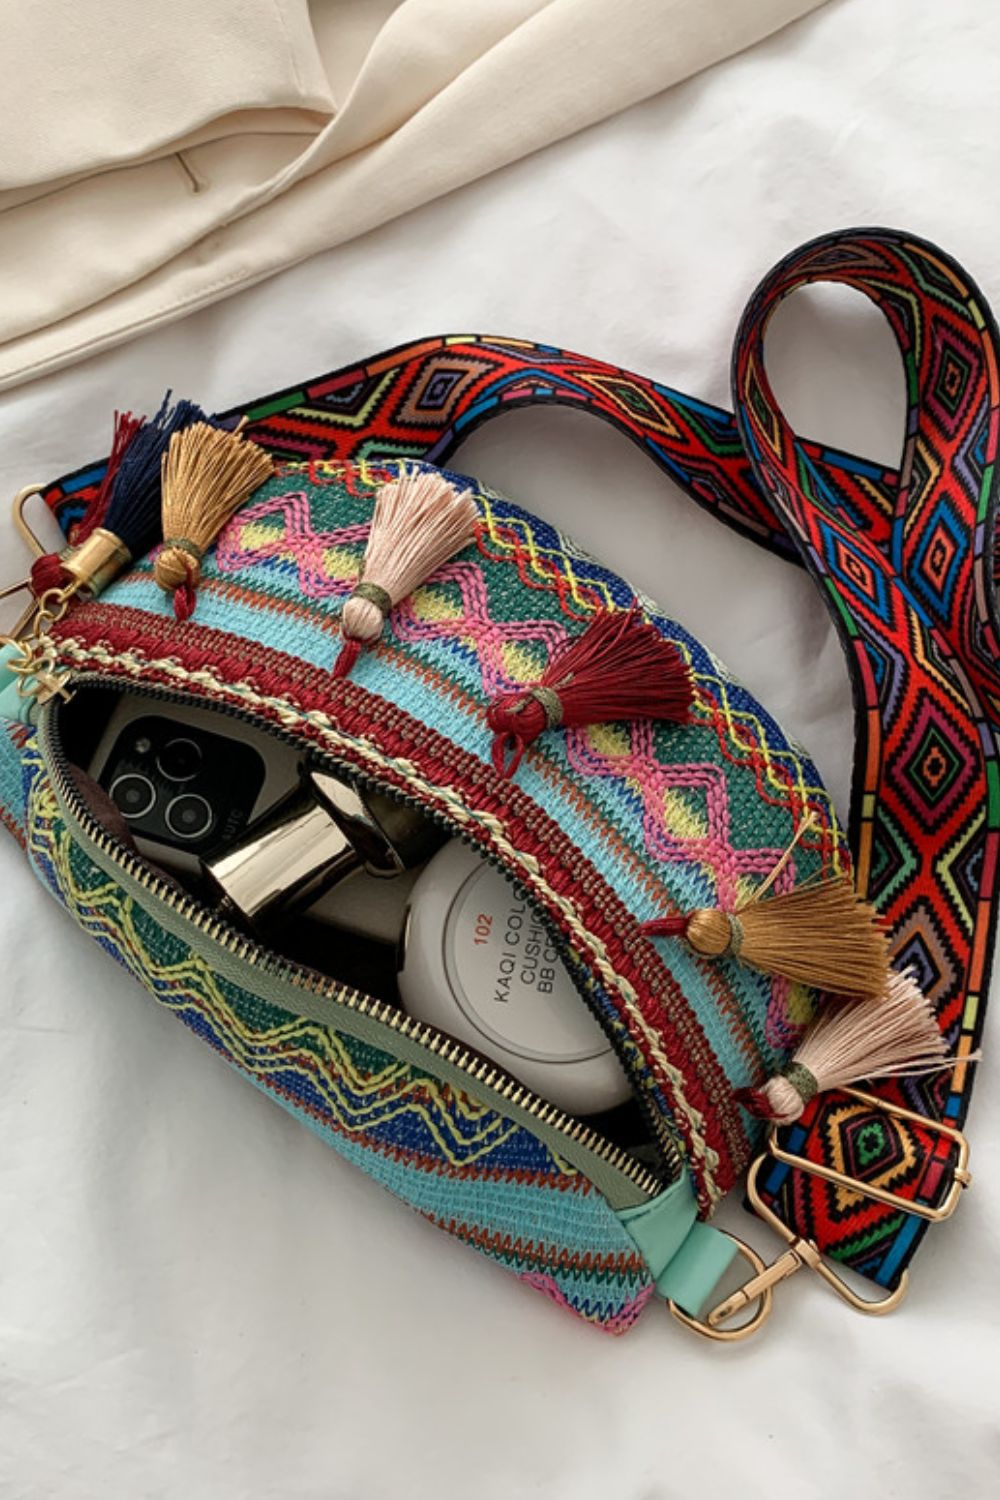 Purses Bags - Store for ethnic bohemian bags, purses, shoulder